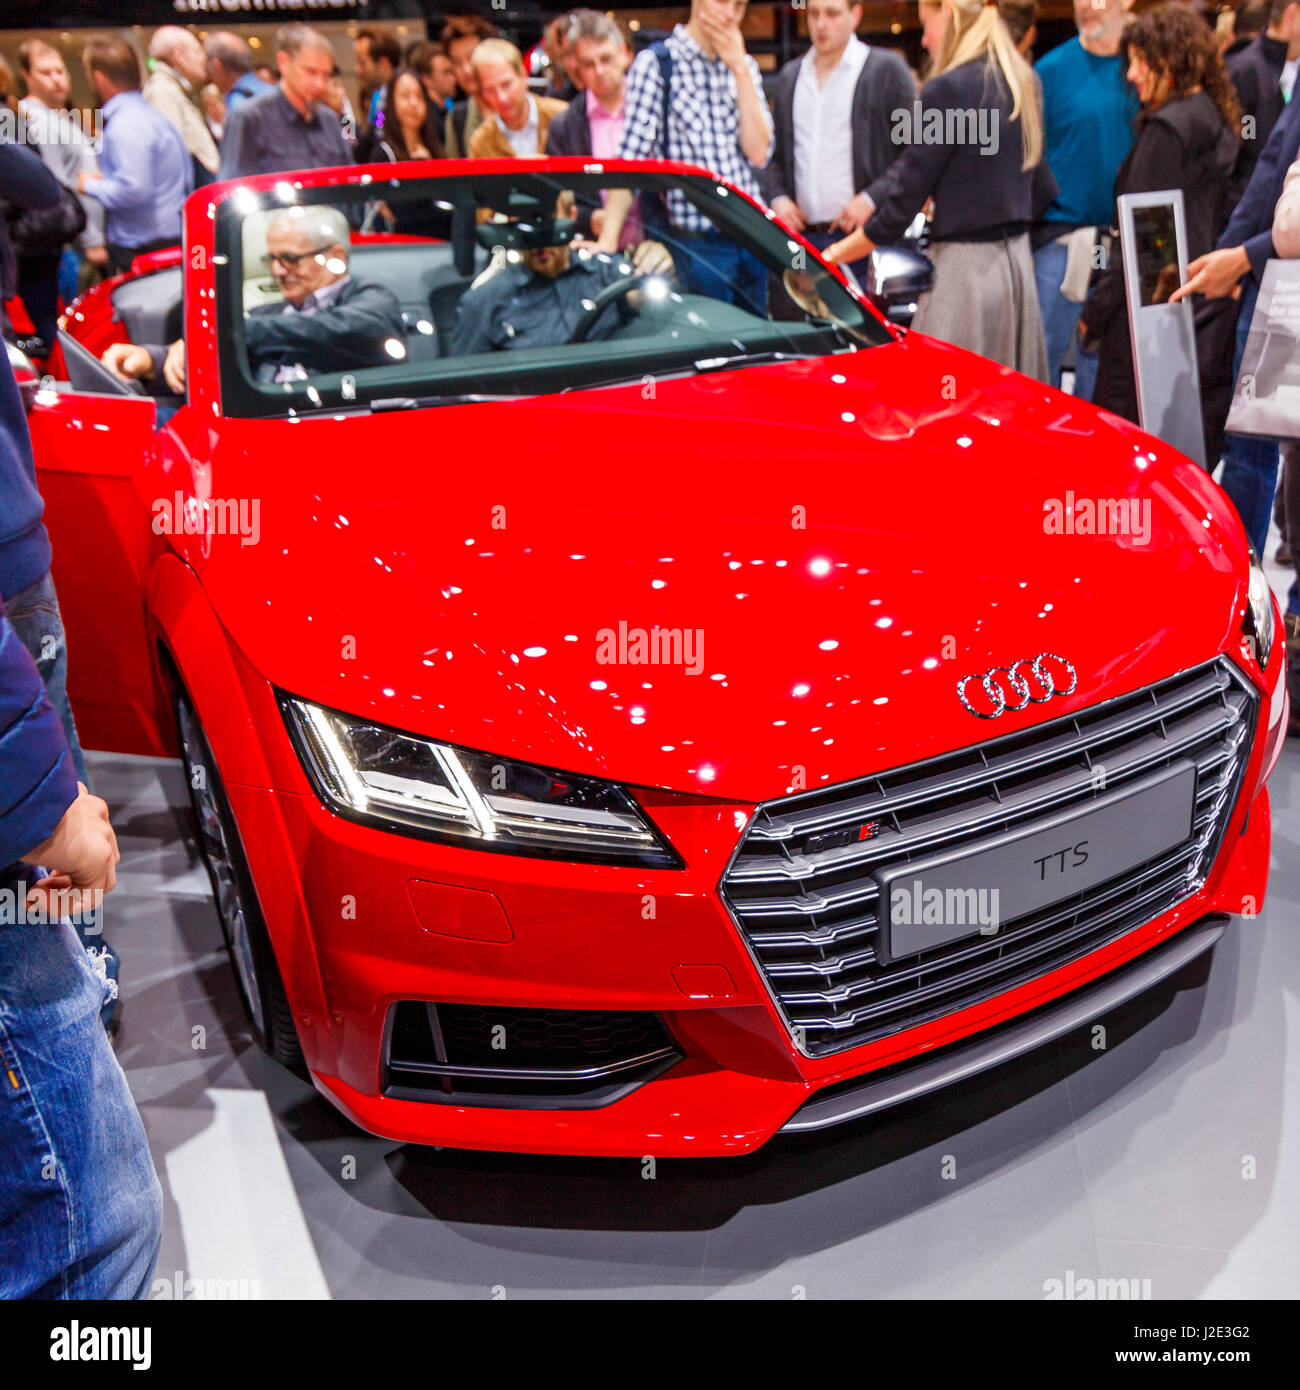 FRANKFURT - Septiembre 22, 2015: Audi se muestra en la 66ª (Internationale Automobil Ausstellung IAA) el 22 de septiembre de 2015 en Frankfurt, Alemania Foto de stock